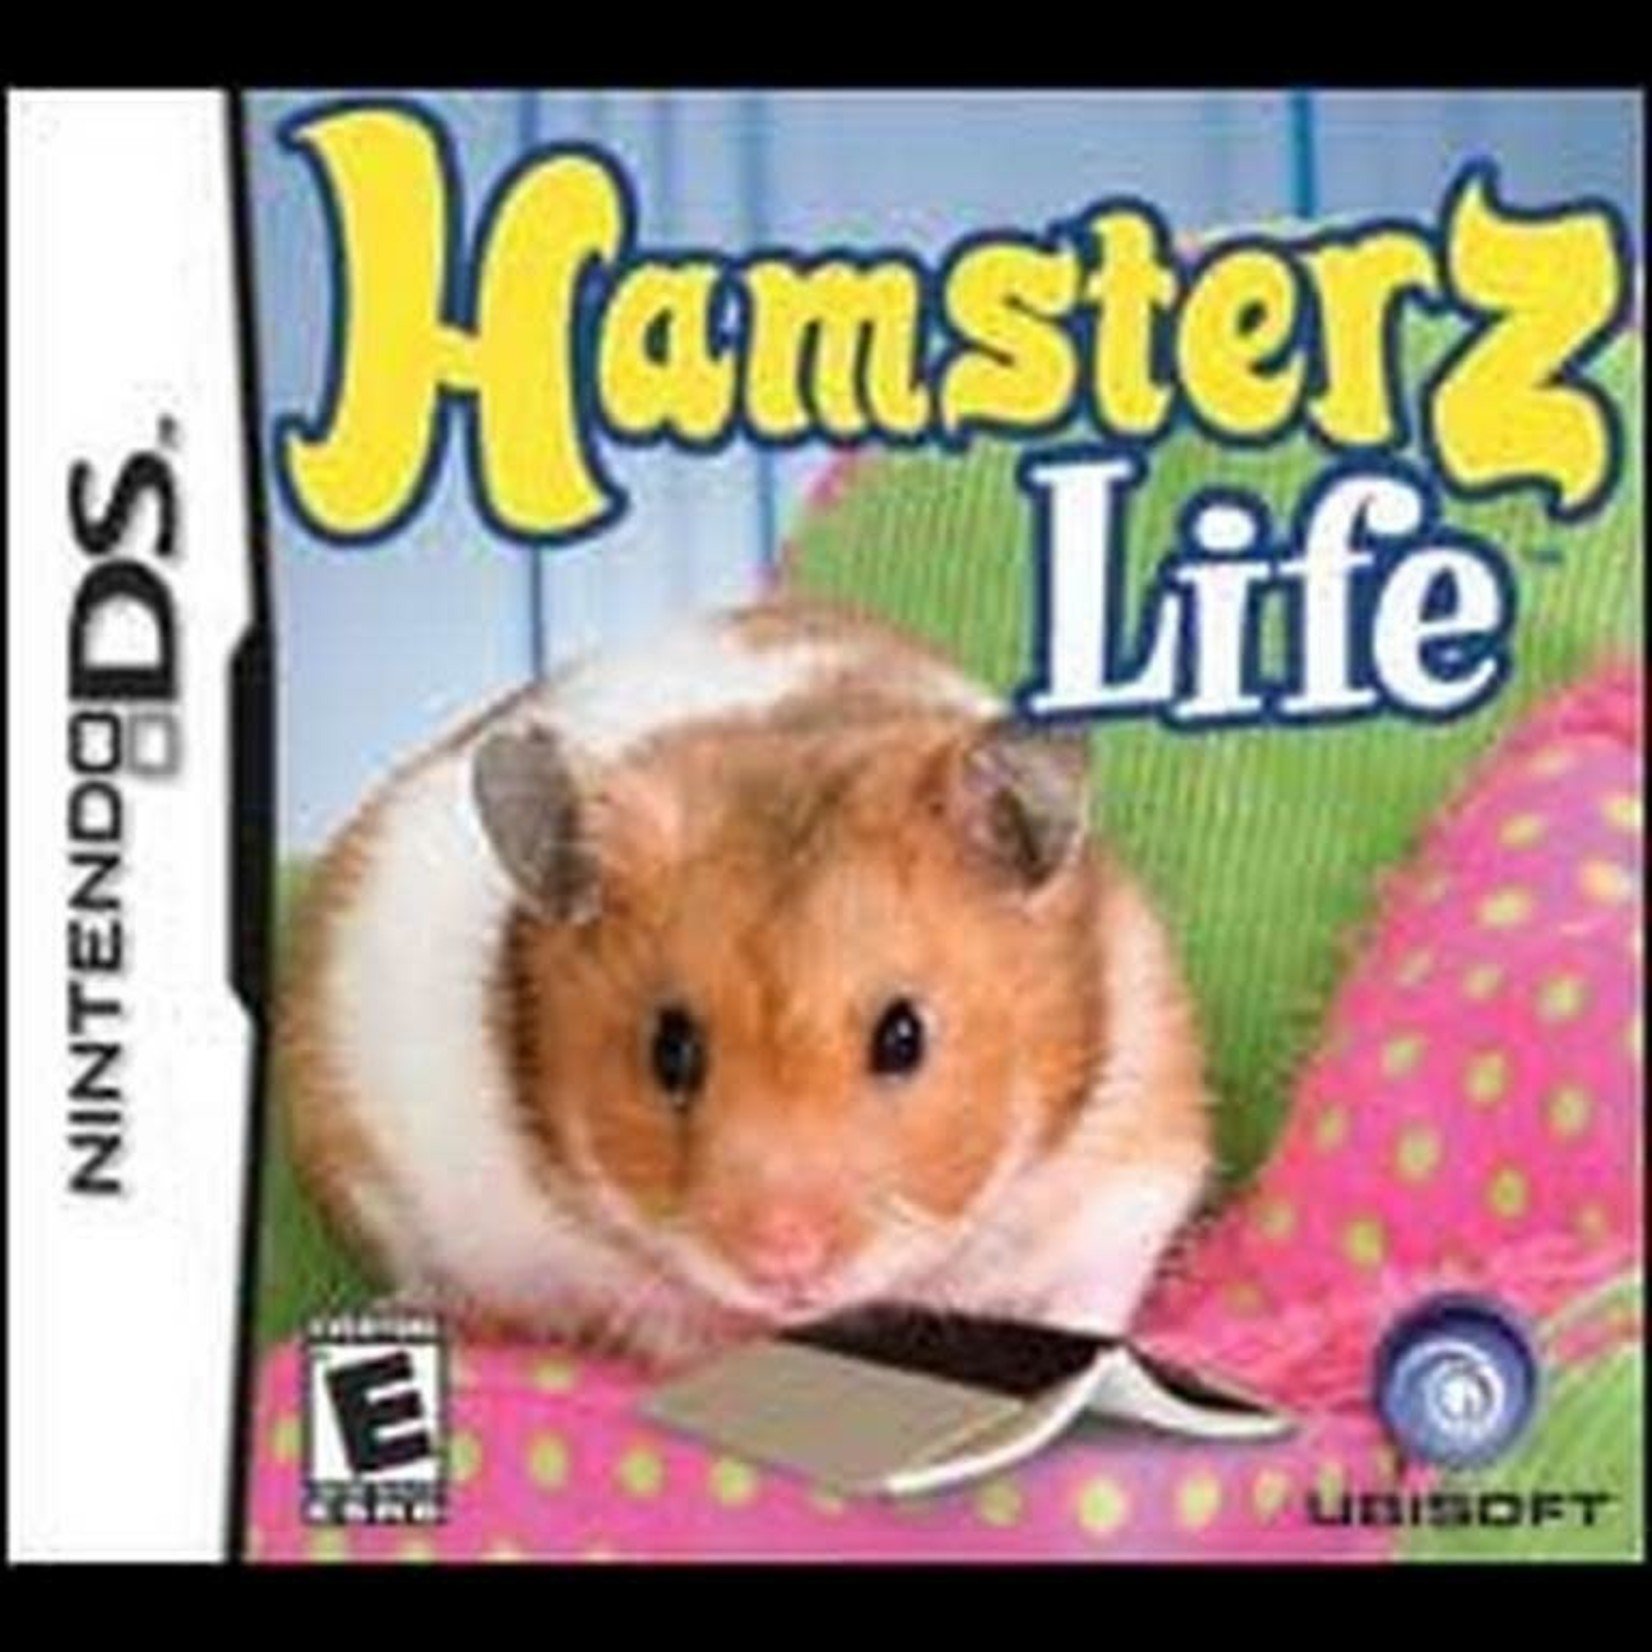 DSU-Hamsterz Life